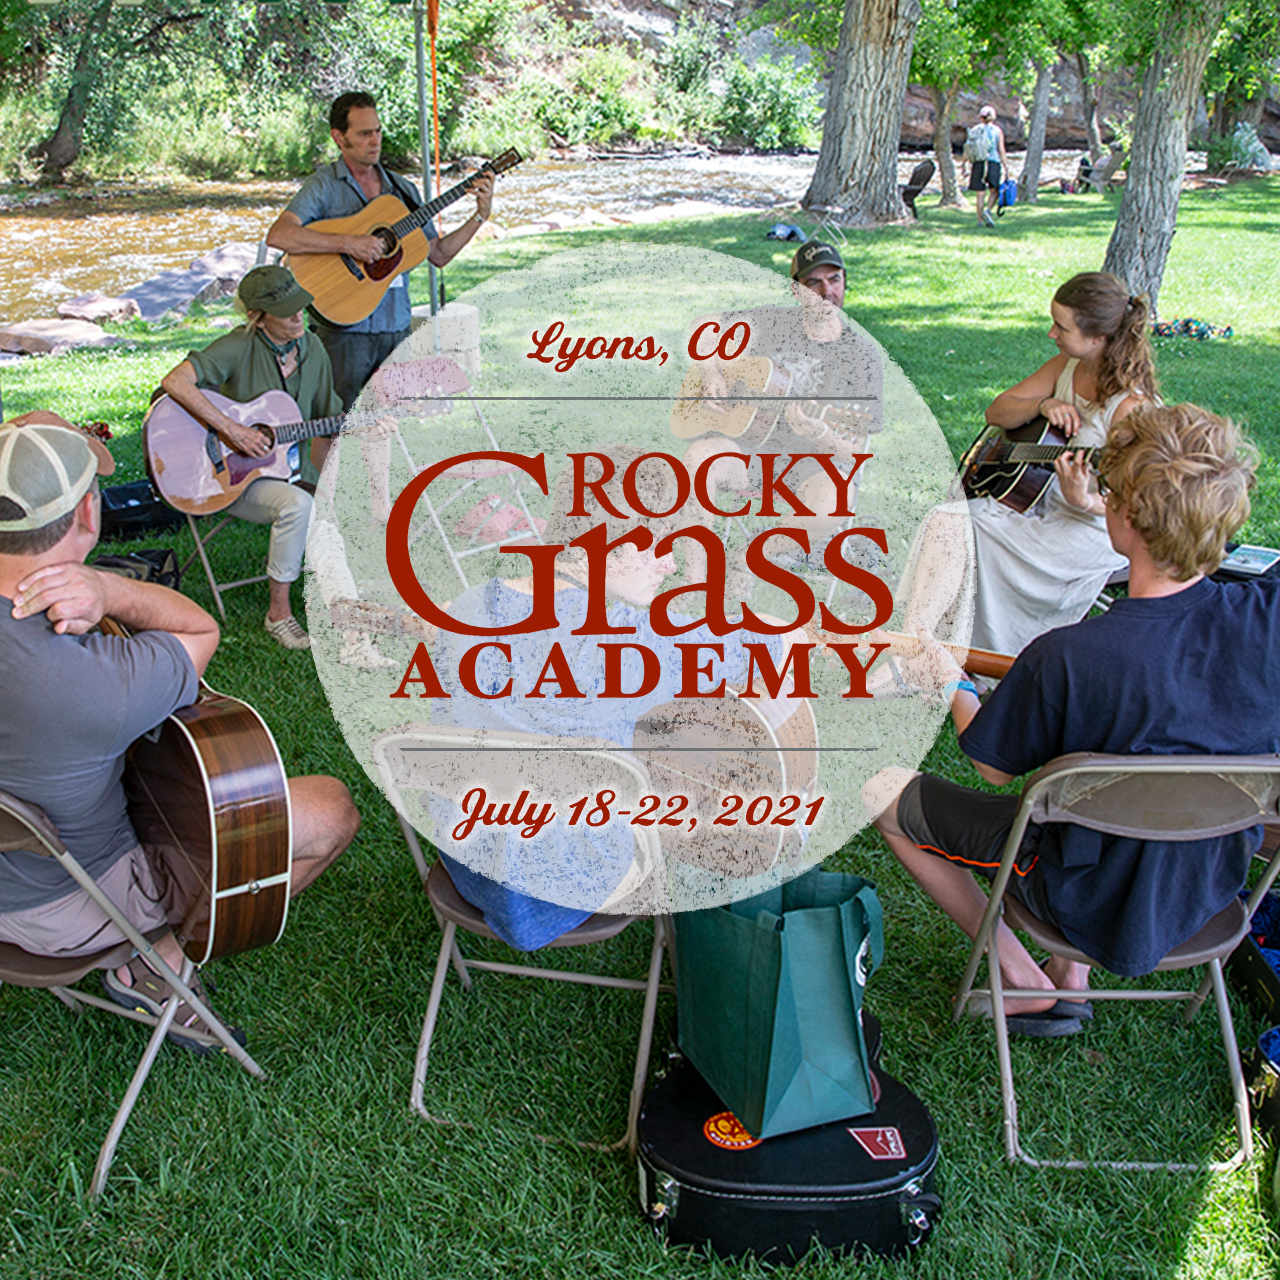 Buy Tickets to RockyGrass Academy in Lyons on Jul 18, 2021 Jul 22,2021